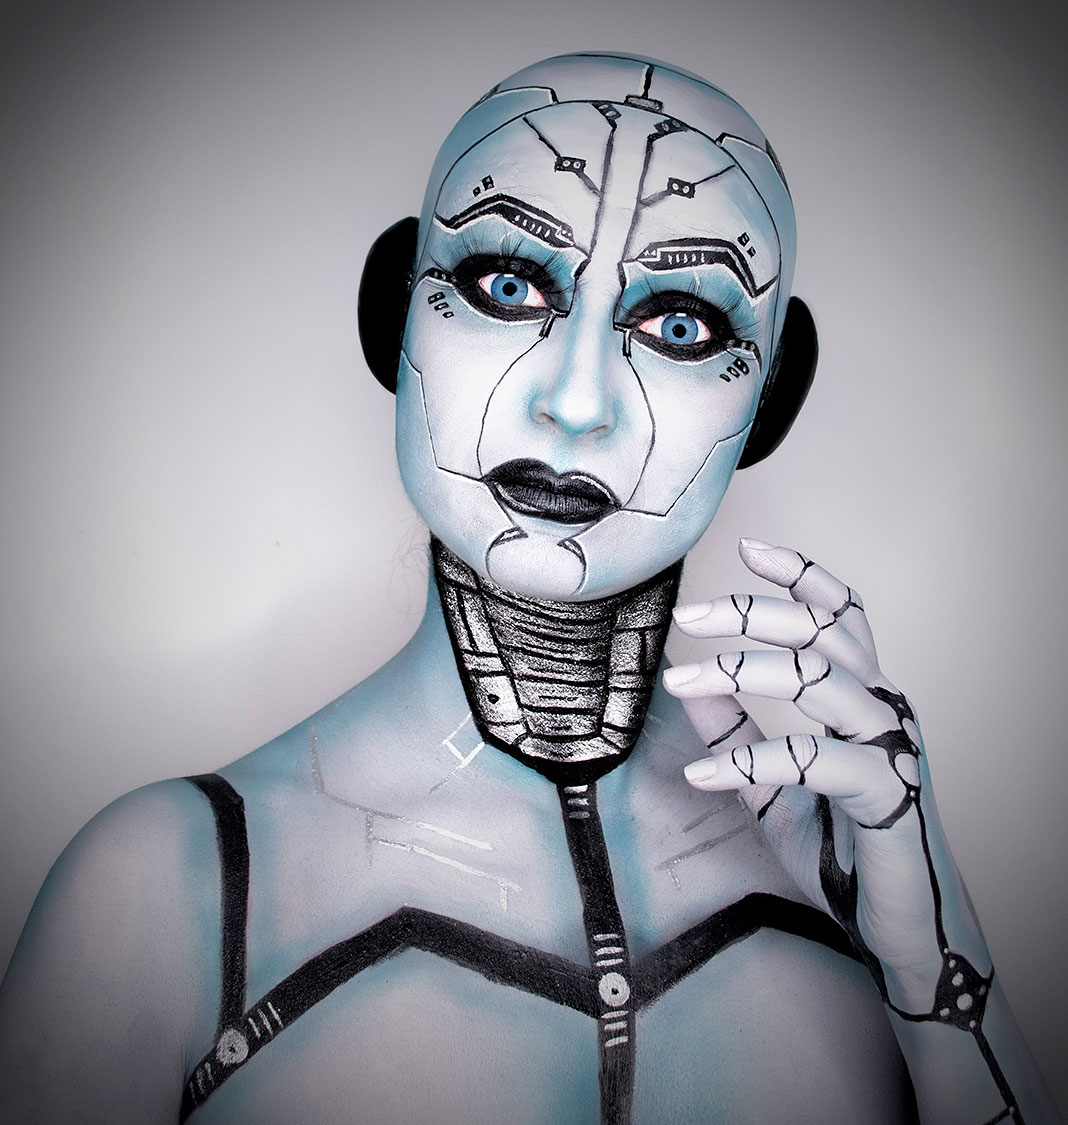 Marian Pumarada caracterizada como un robot